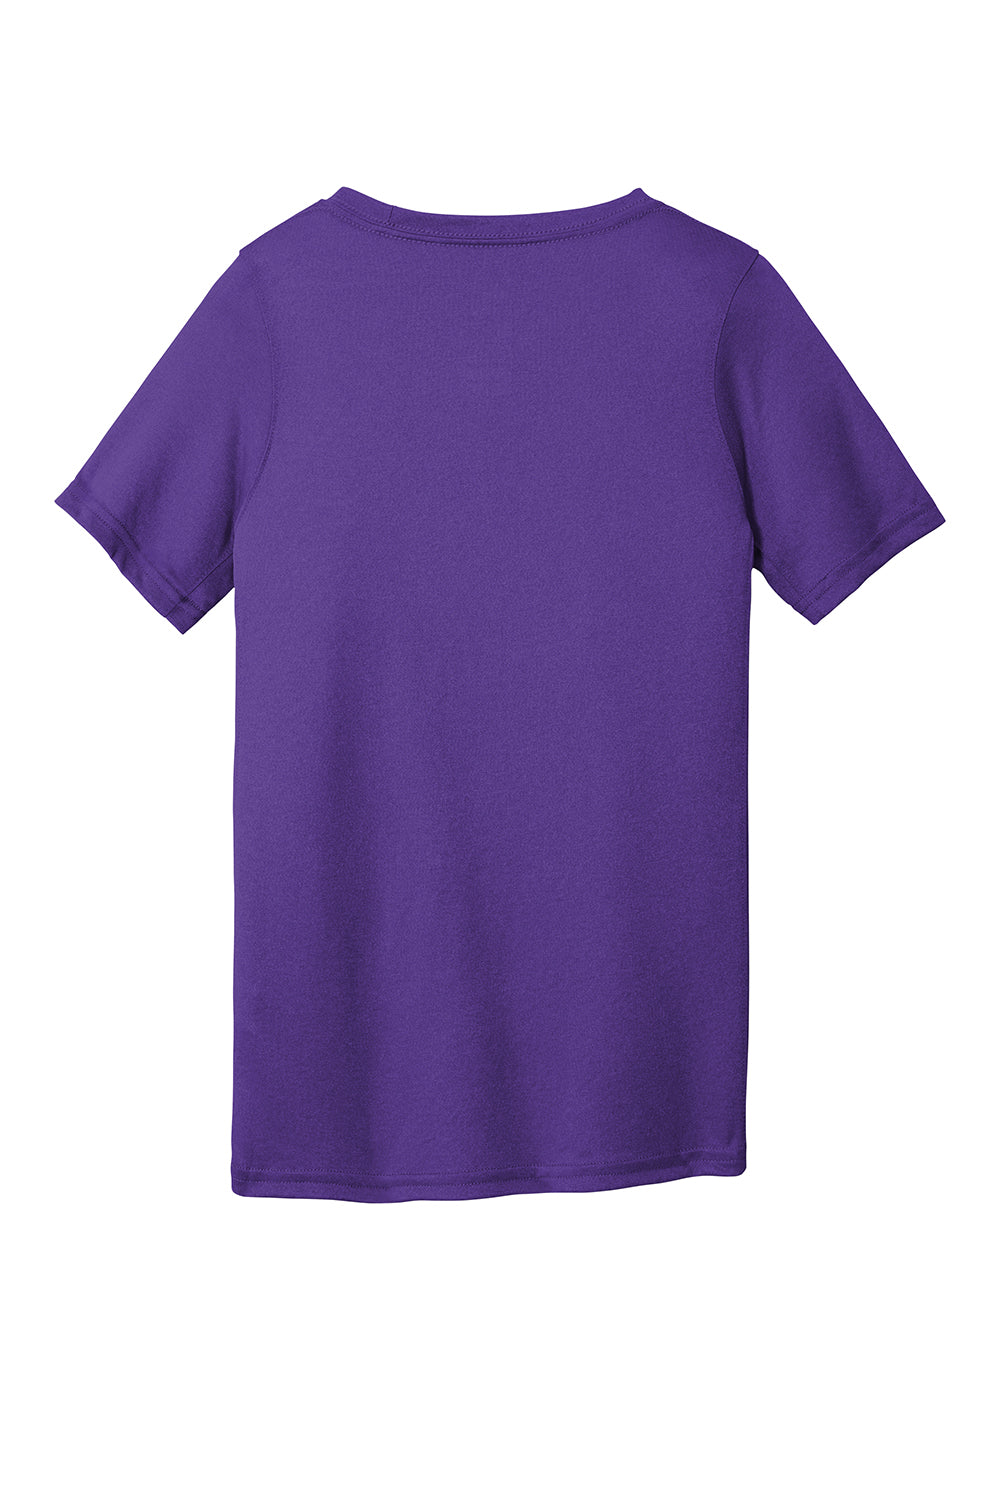 Nike DV7317 Youth Team rLegend Dri-Fit Moisure Wicking Short Sleeve Crewneck T-Shirt Court Purple Flat Back